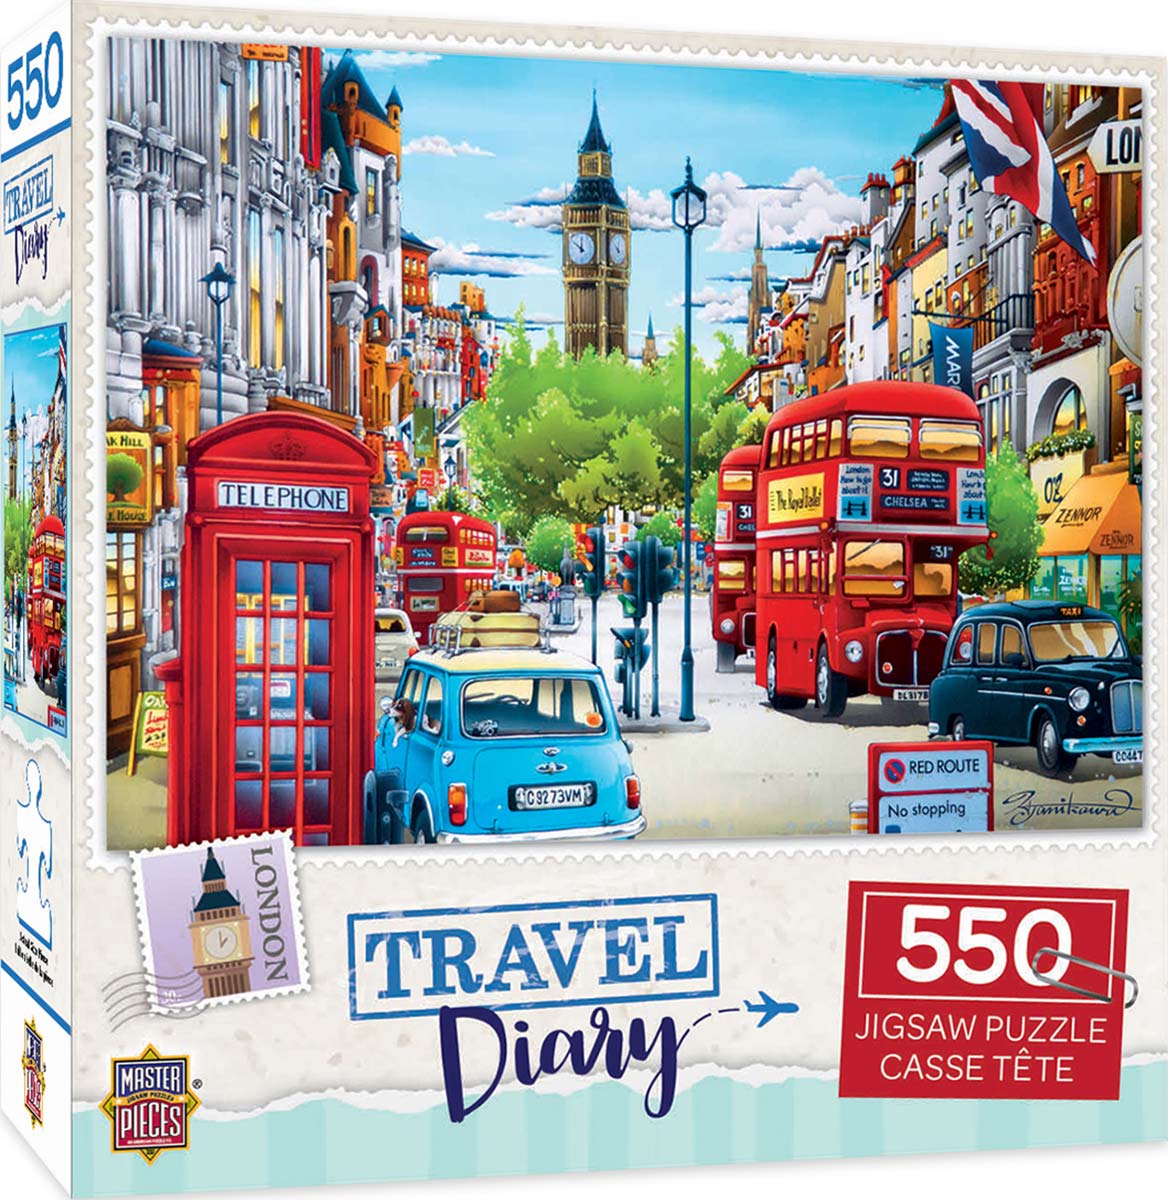 CEACO AROUND THE WORLD JIGSAW PUZZLE LONDON ENGLAND 550 PCS #2396-9 TRAVEL 